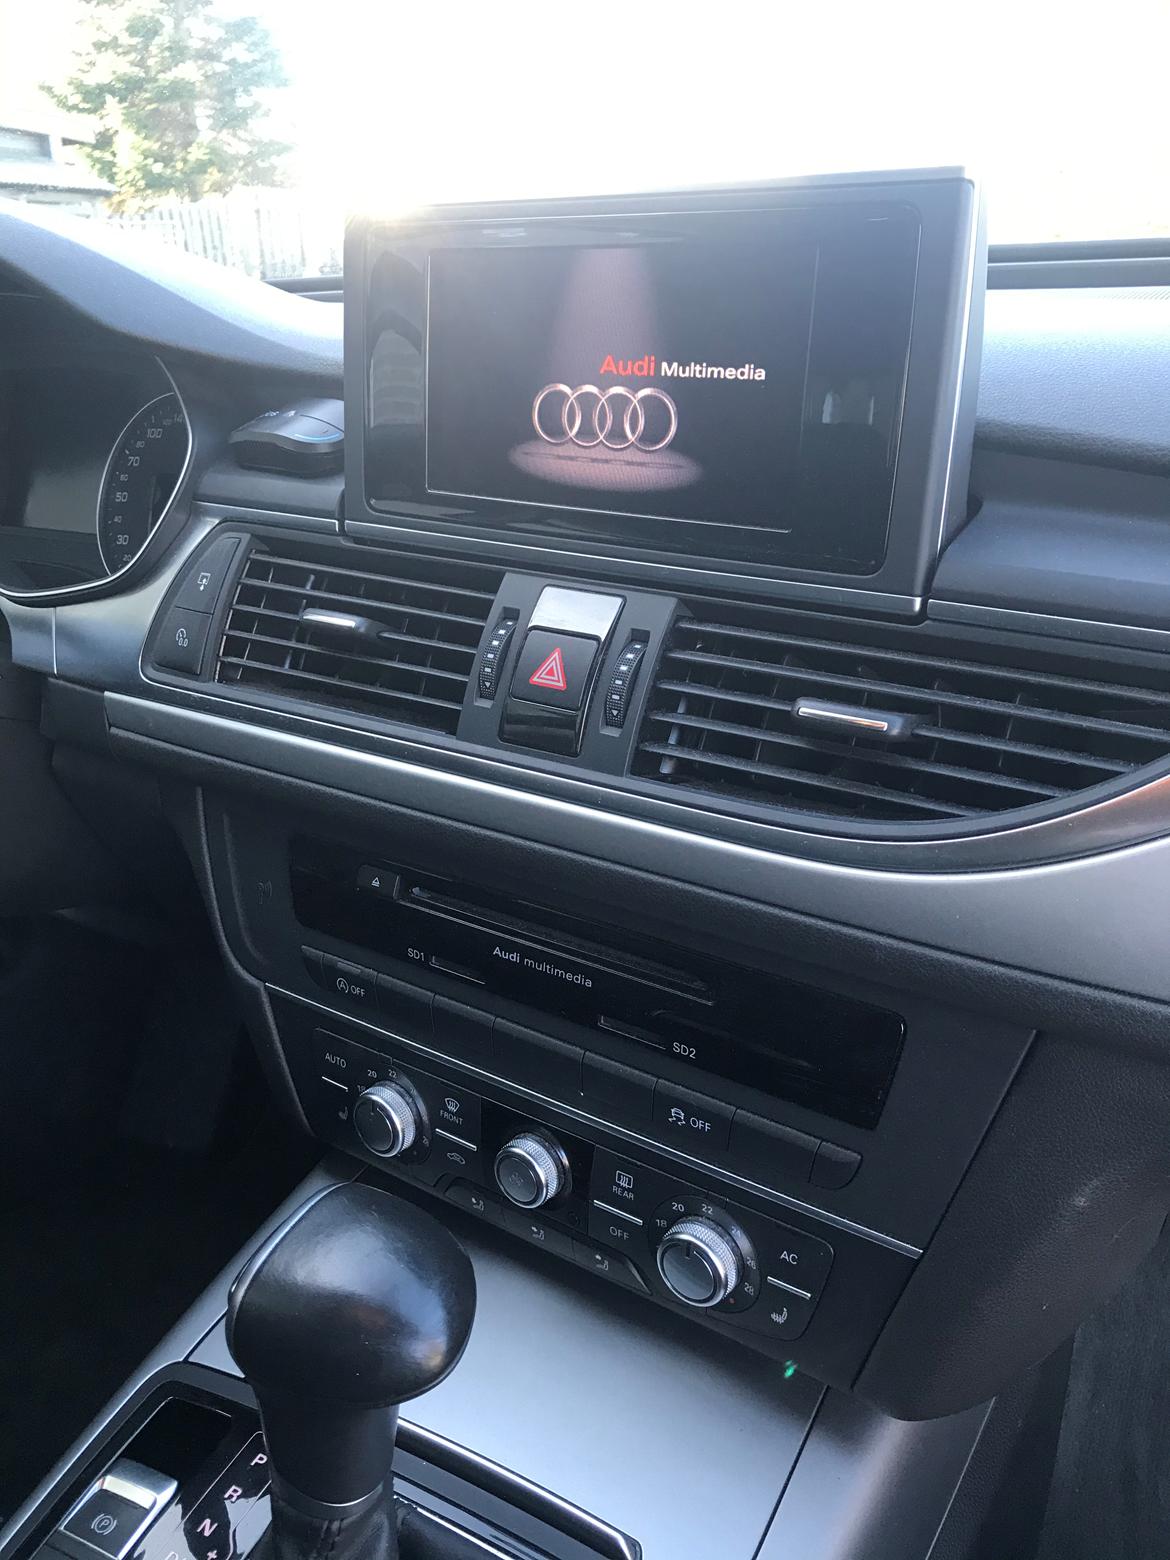 Audi A6 3.0 V6 TDI Multitronic Avant billede 19